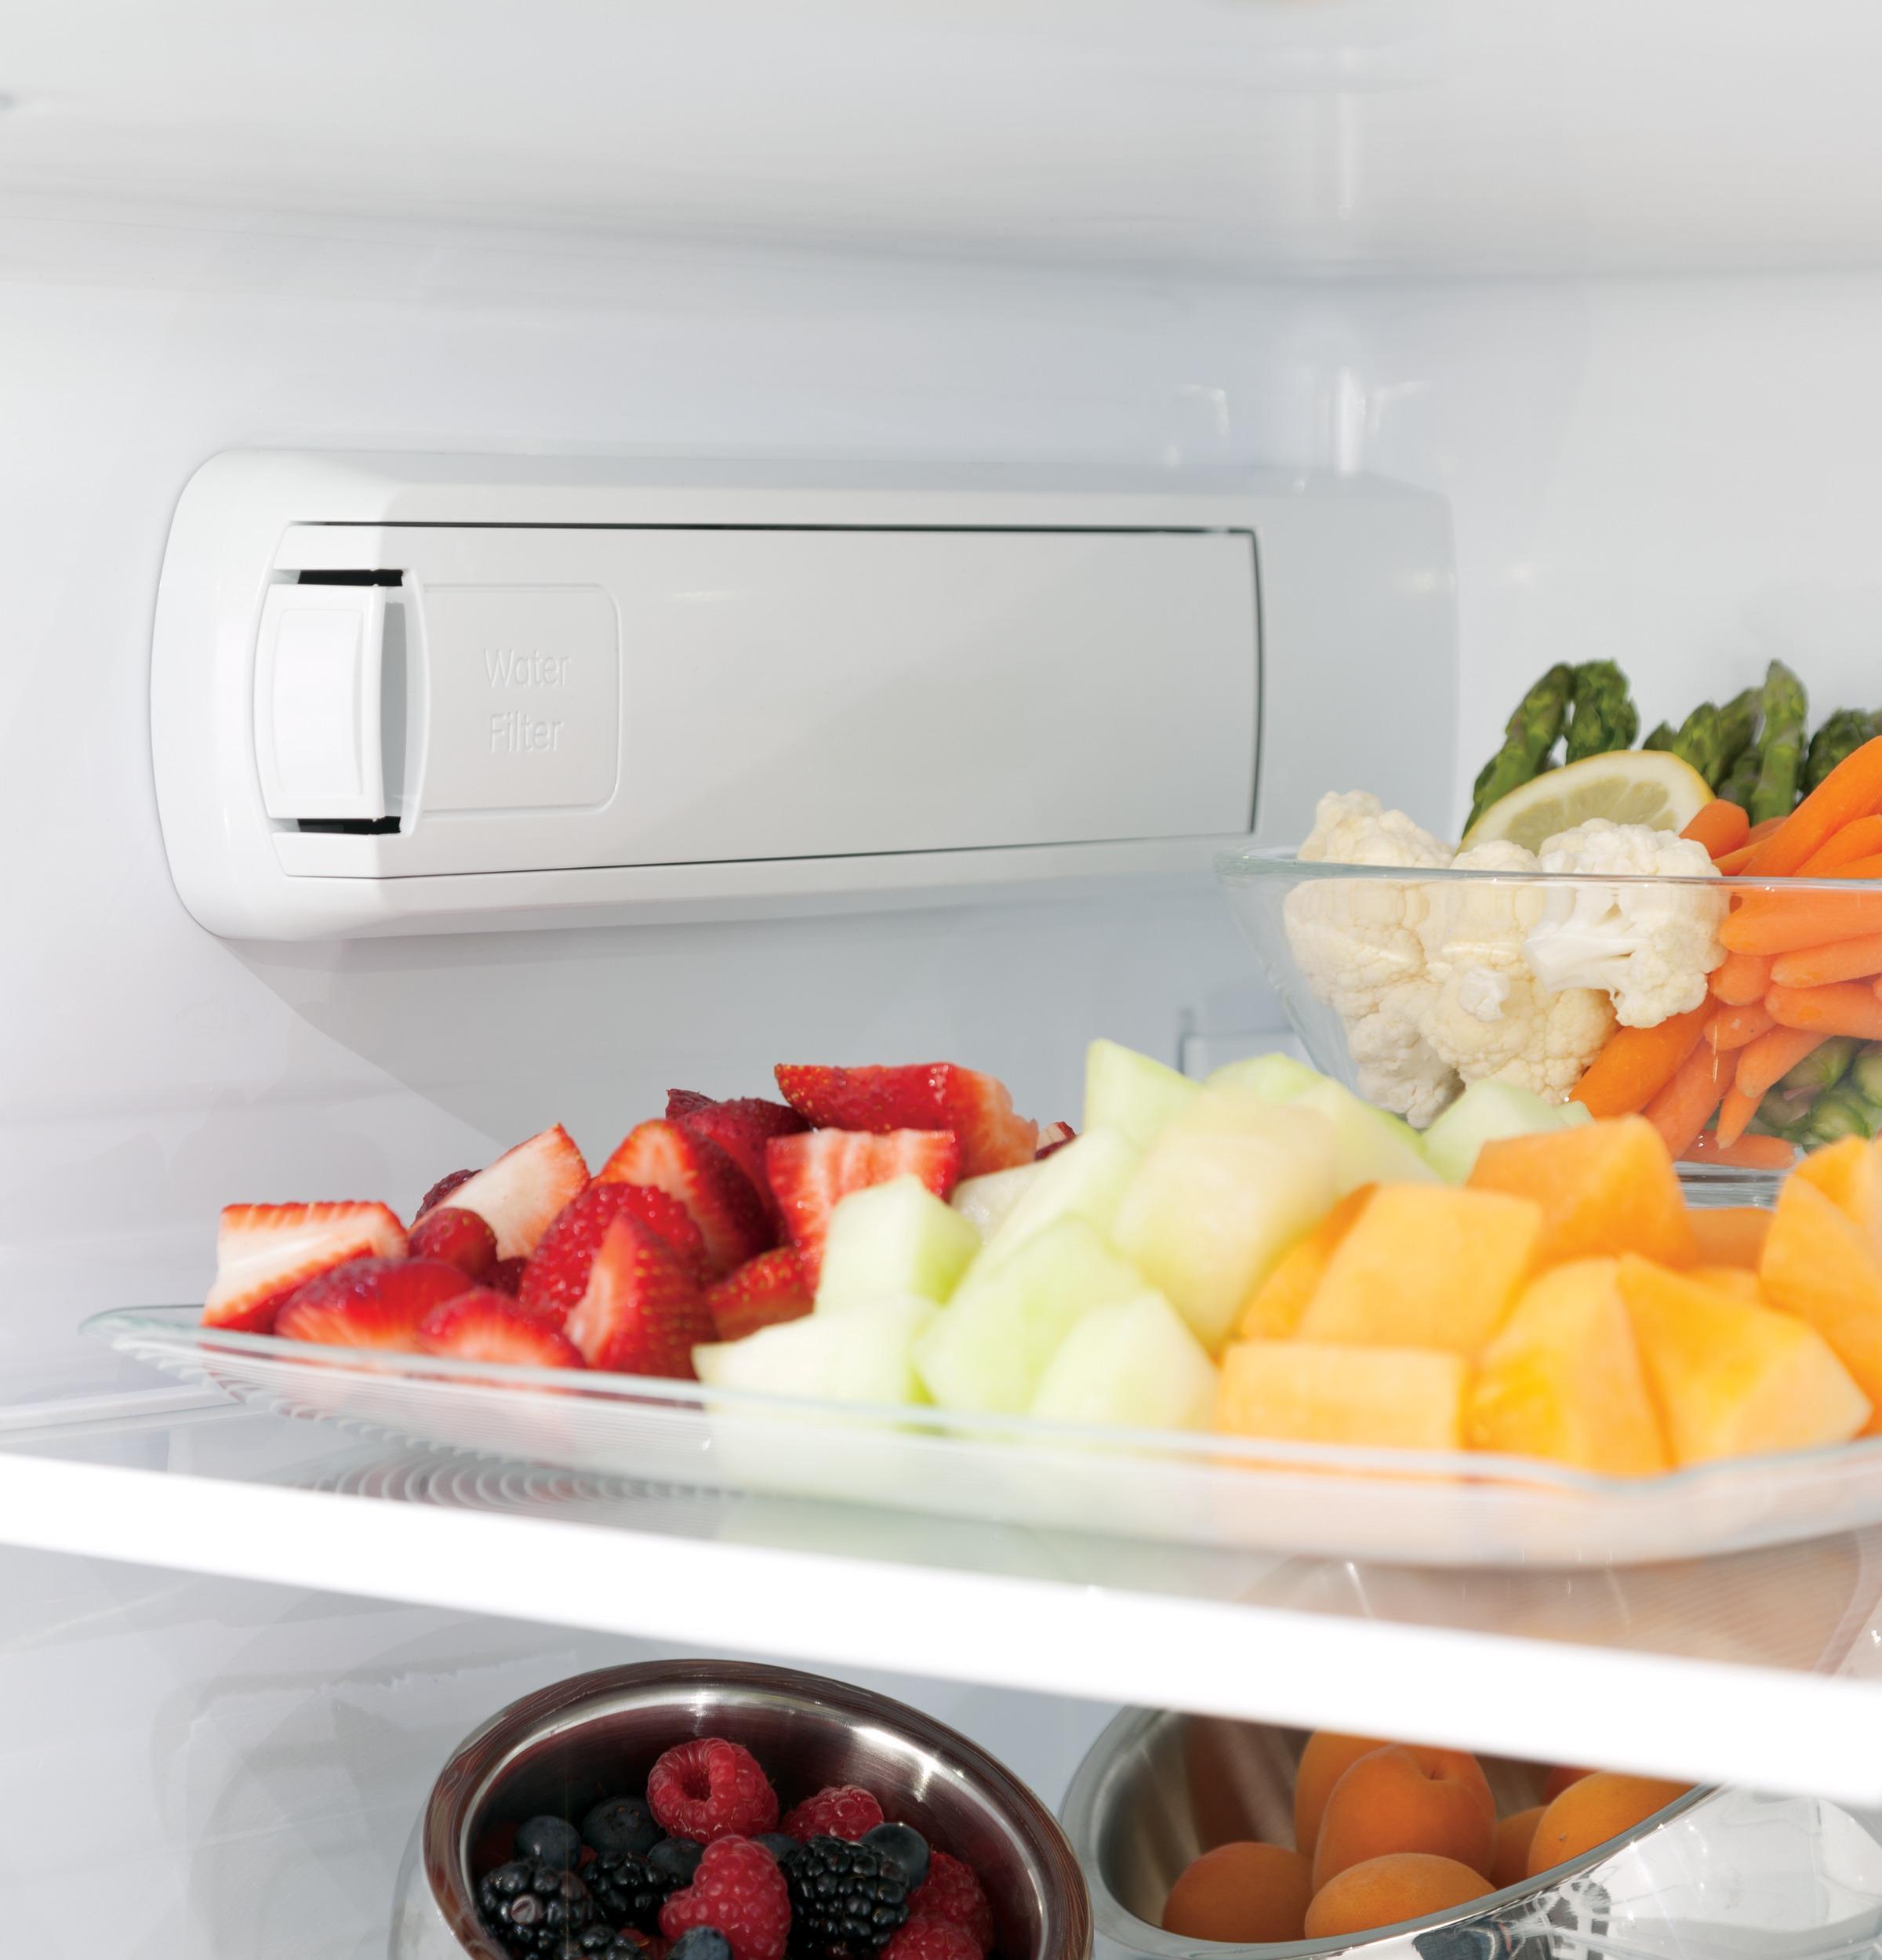 GE® ENERGY STAR® 27.7 Cu. Ft. French-Door Refrigerator